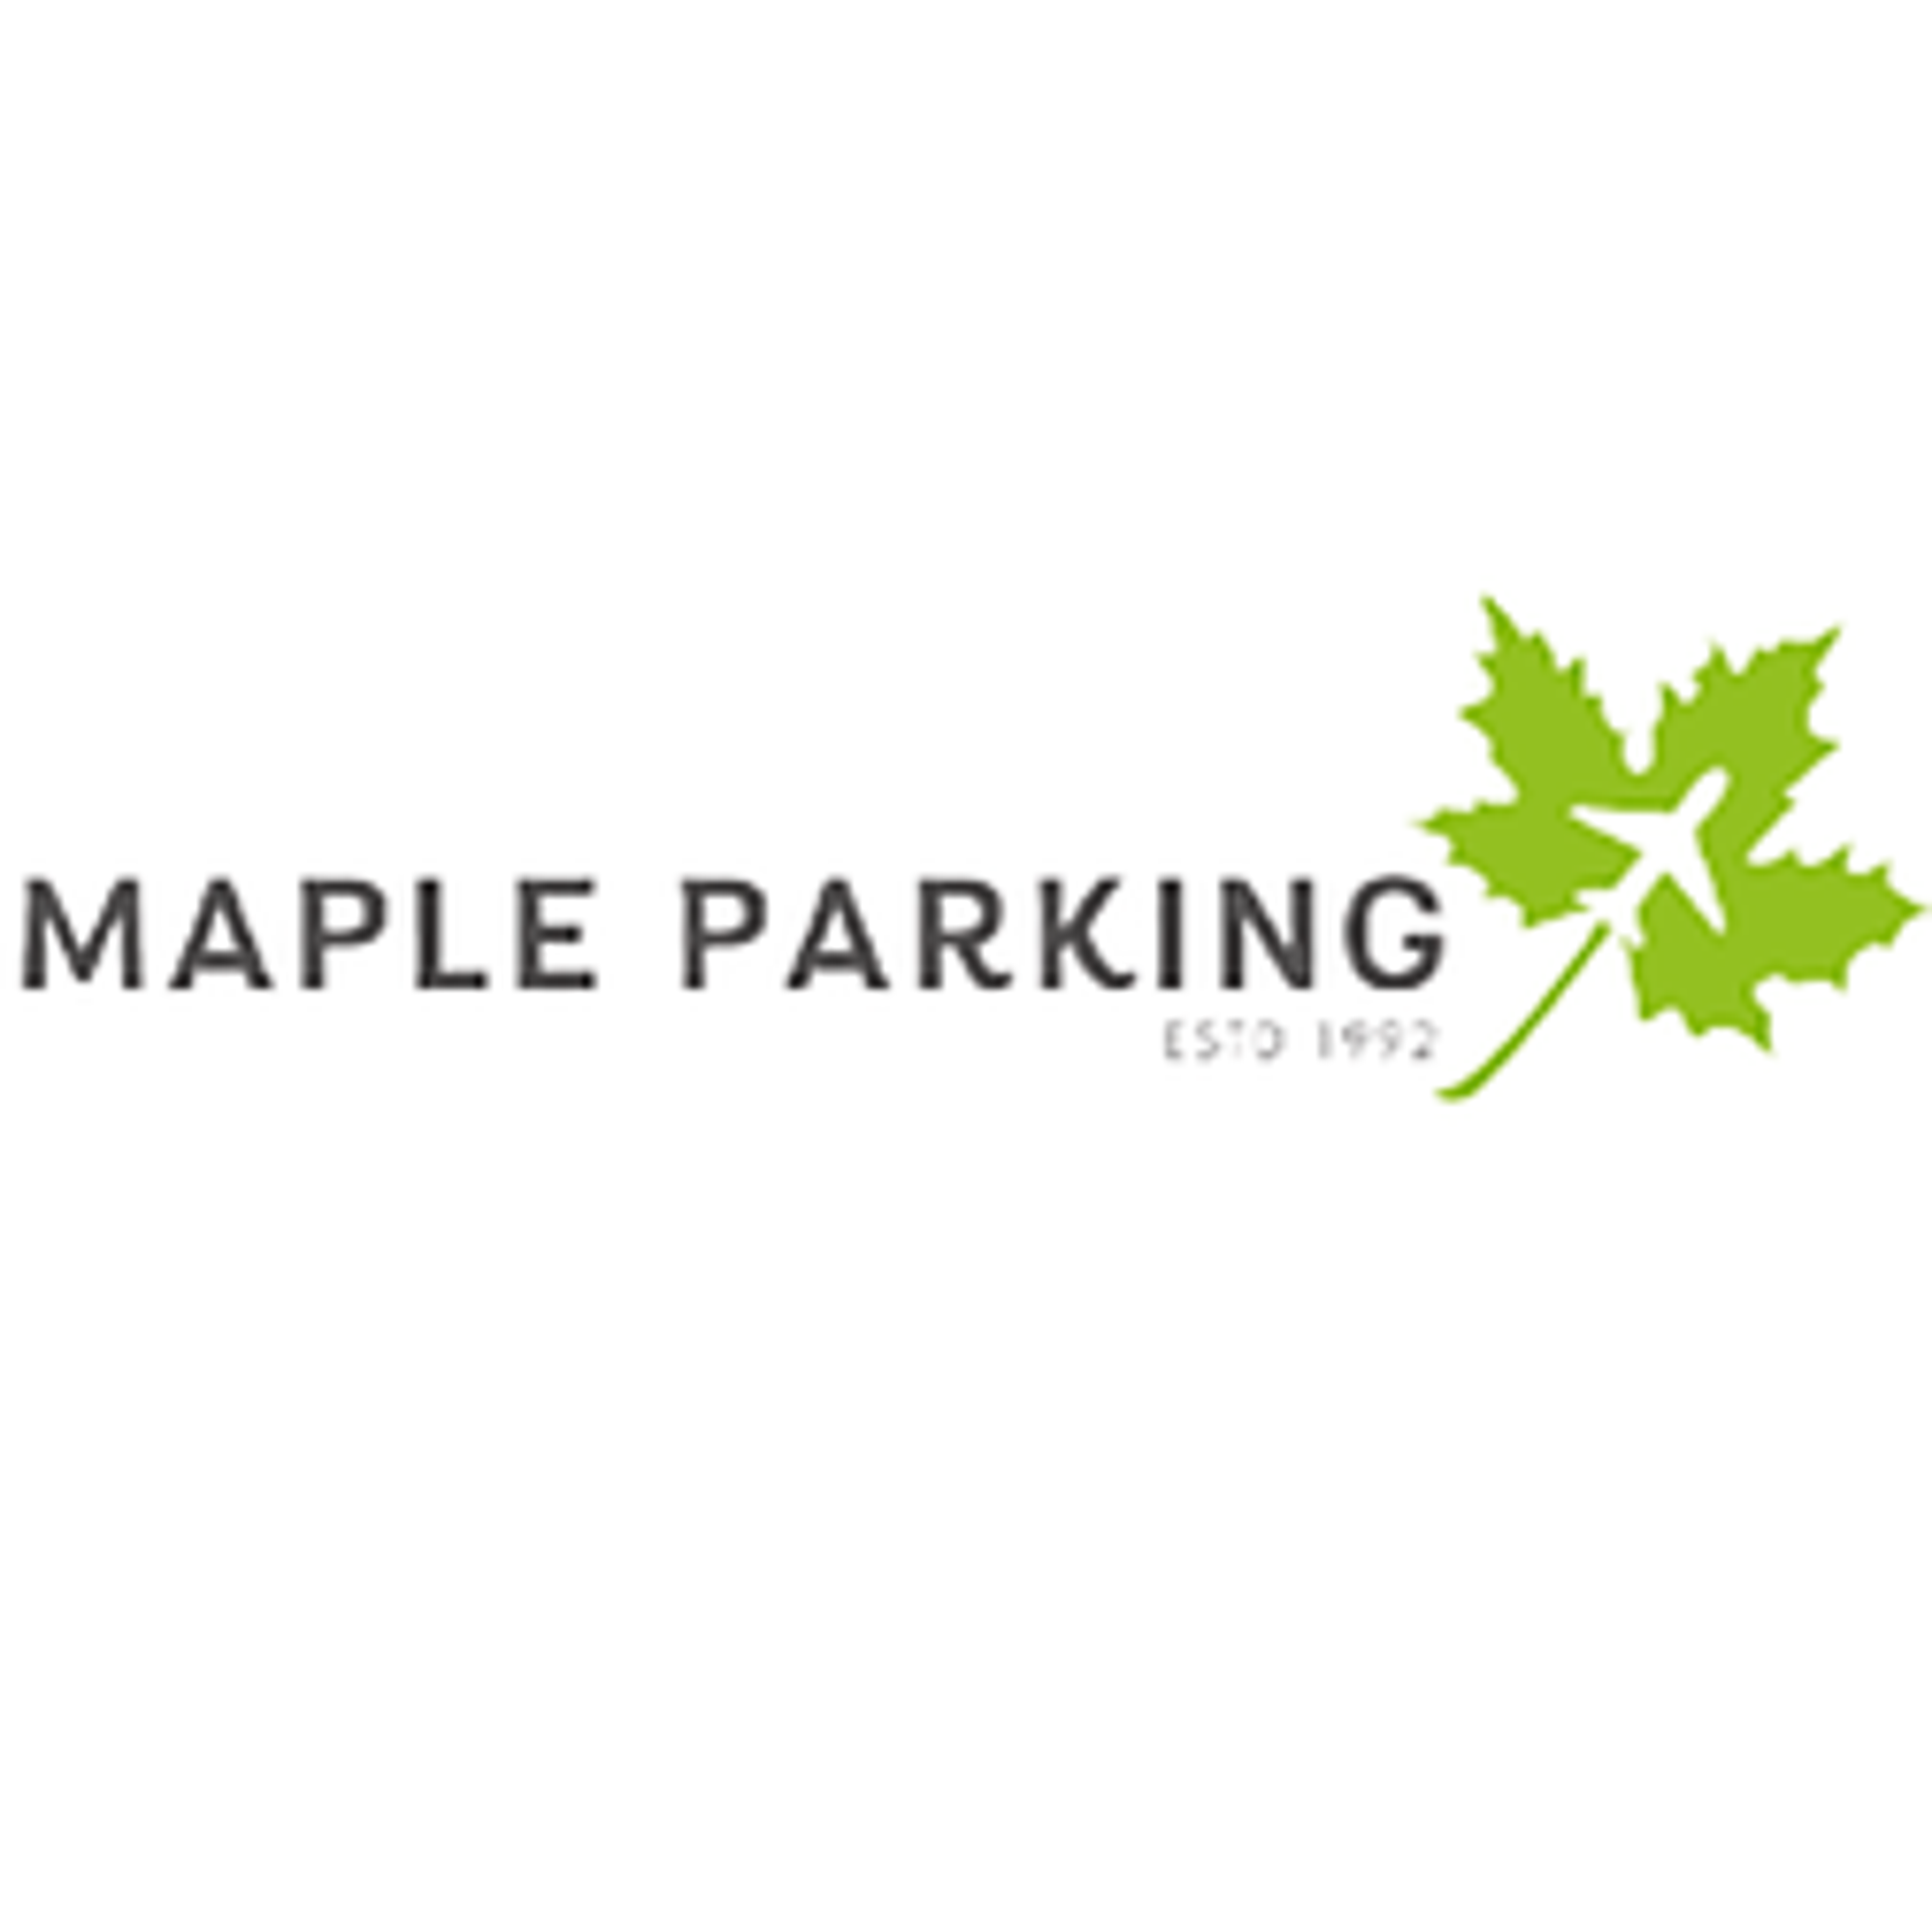  Maple Parking 